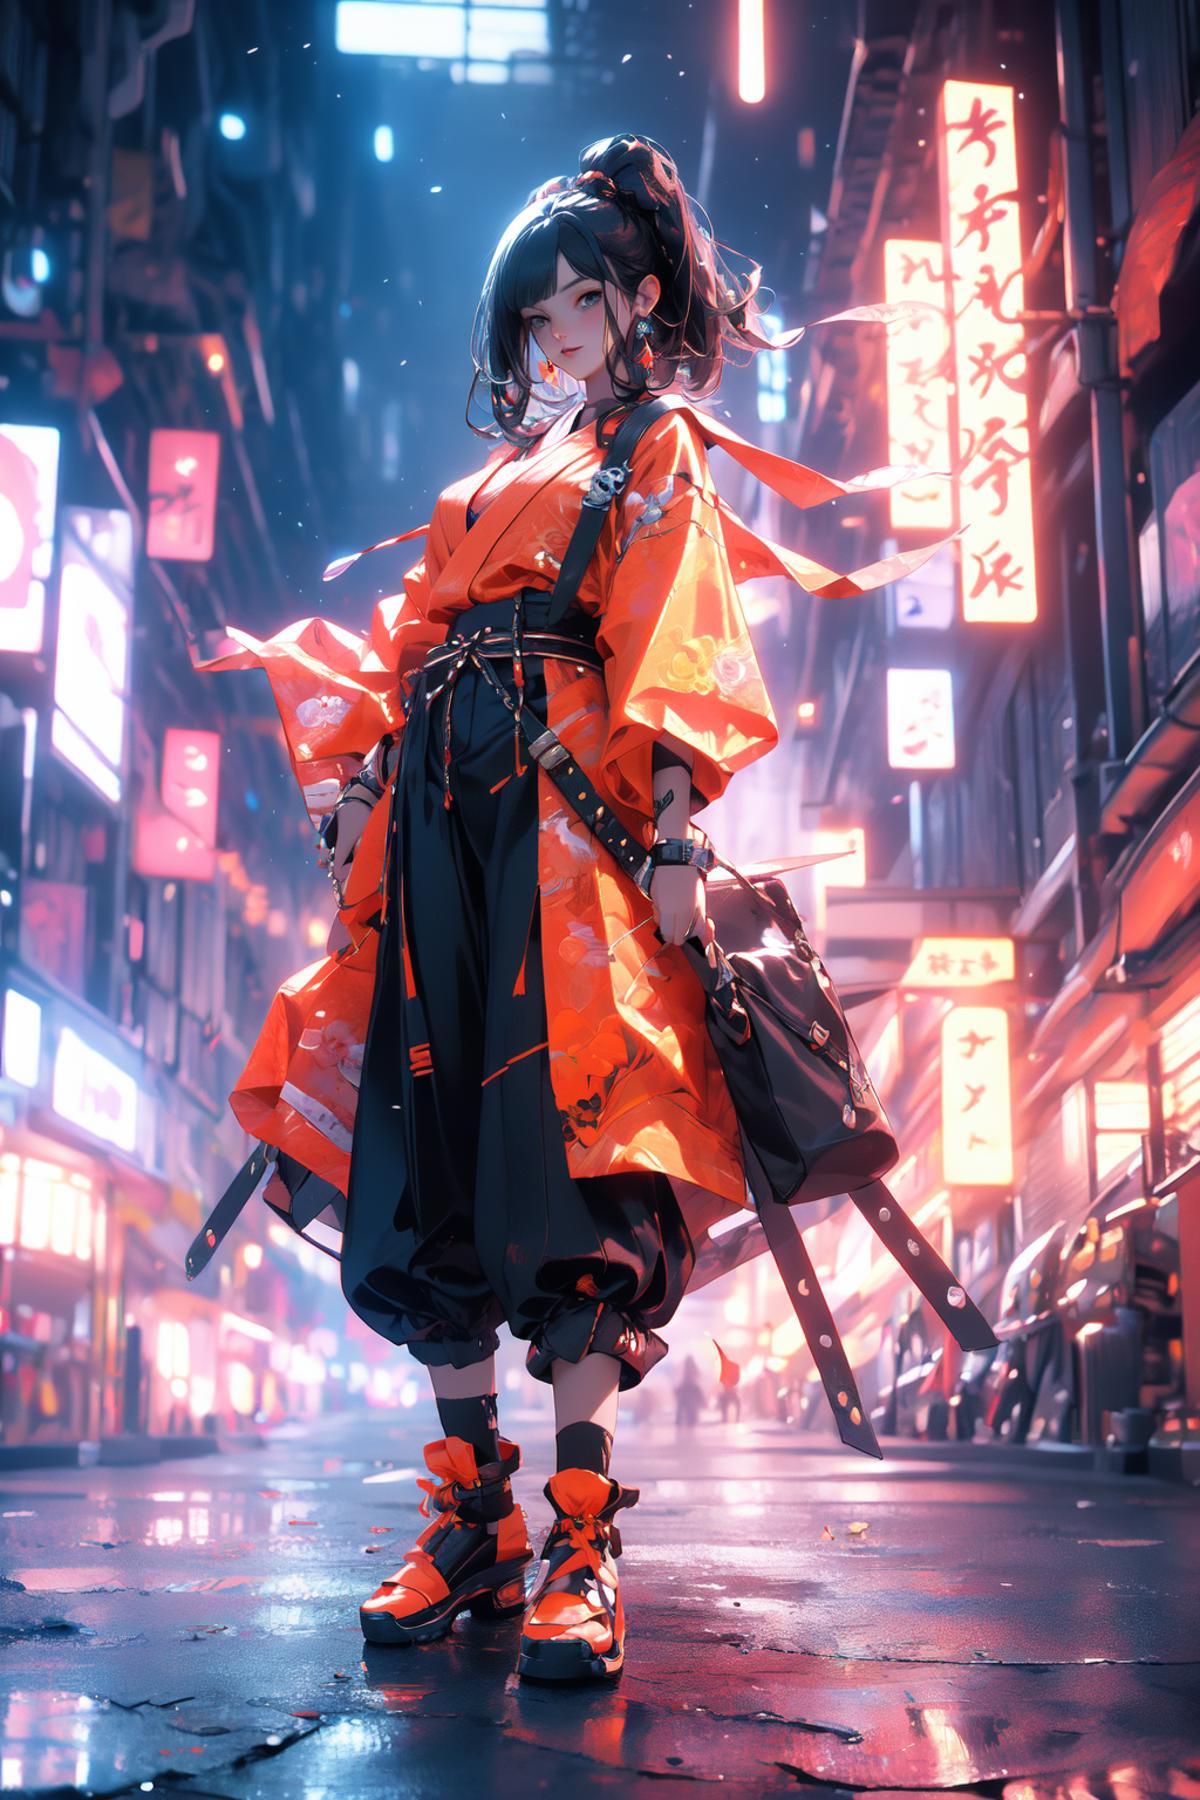 武士少女/Samurai girl lora image by chosen